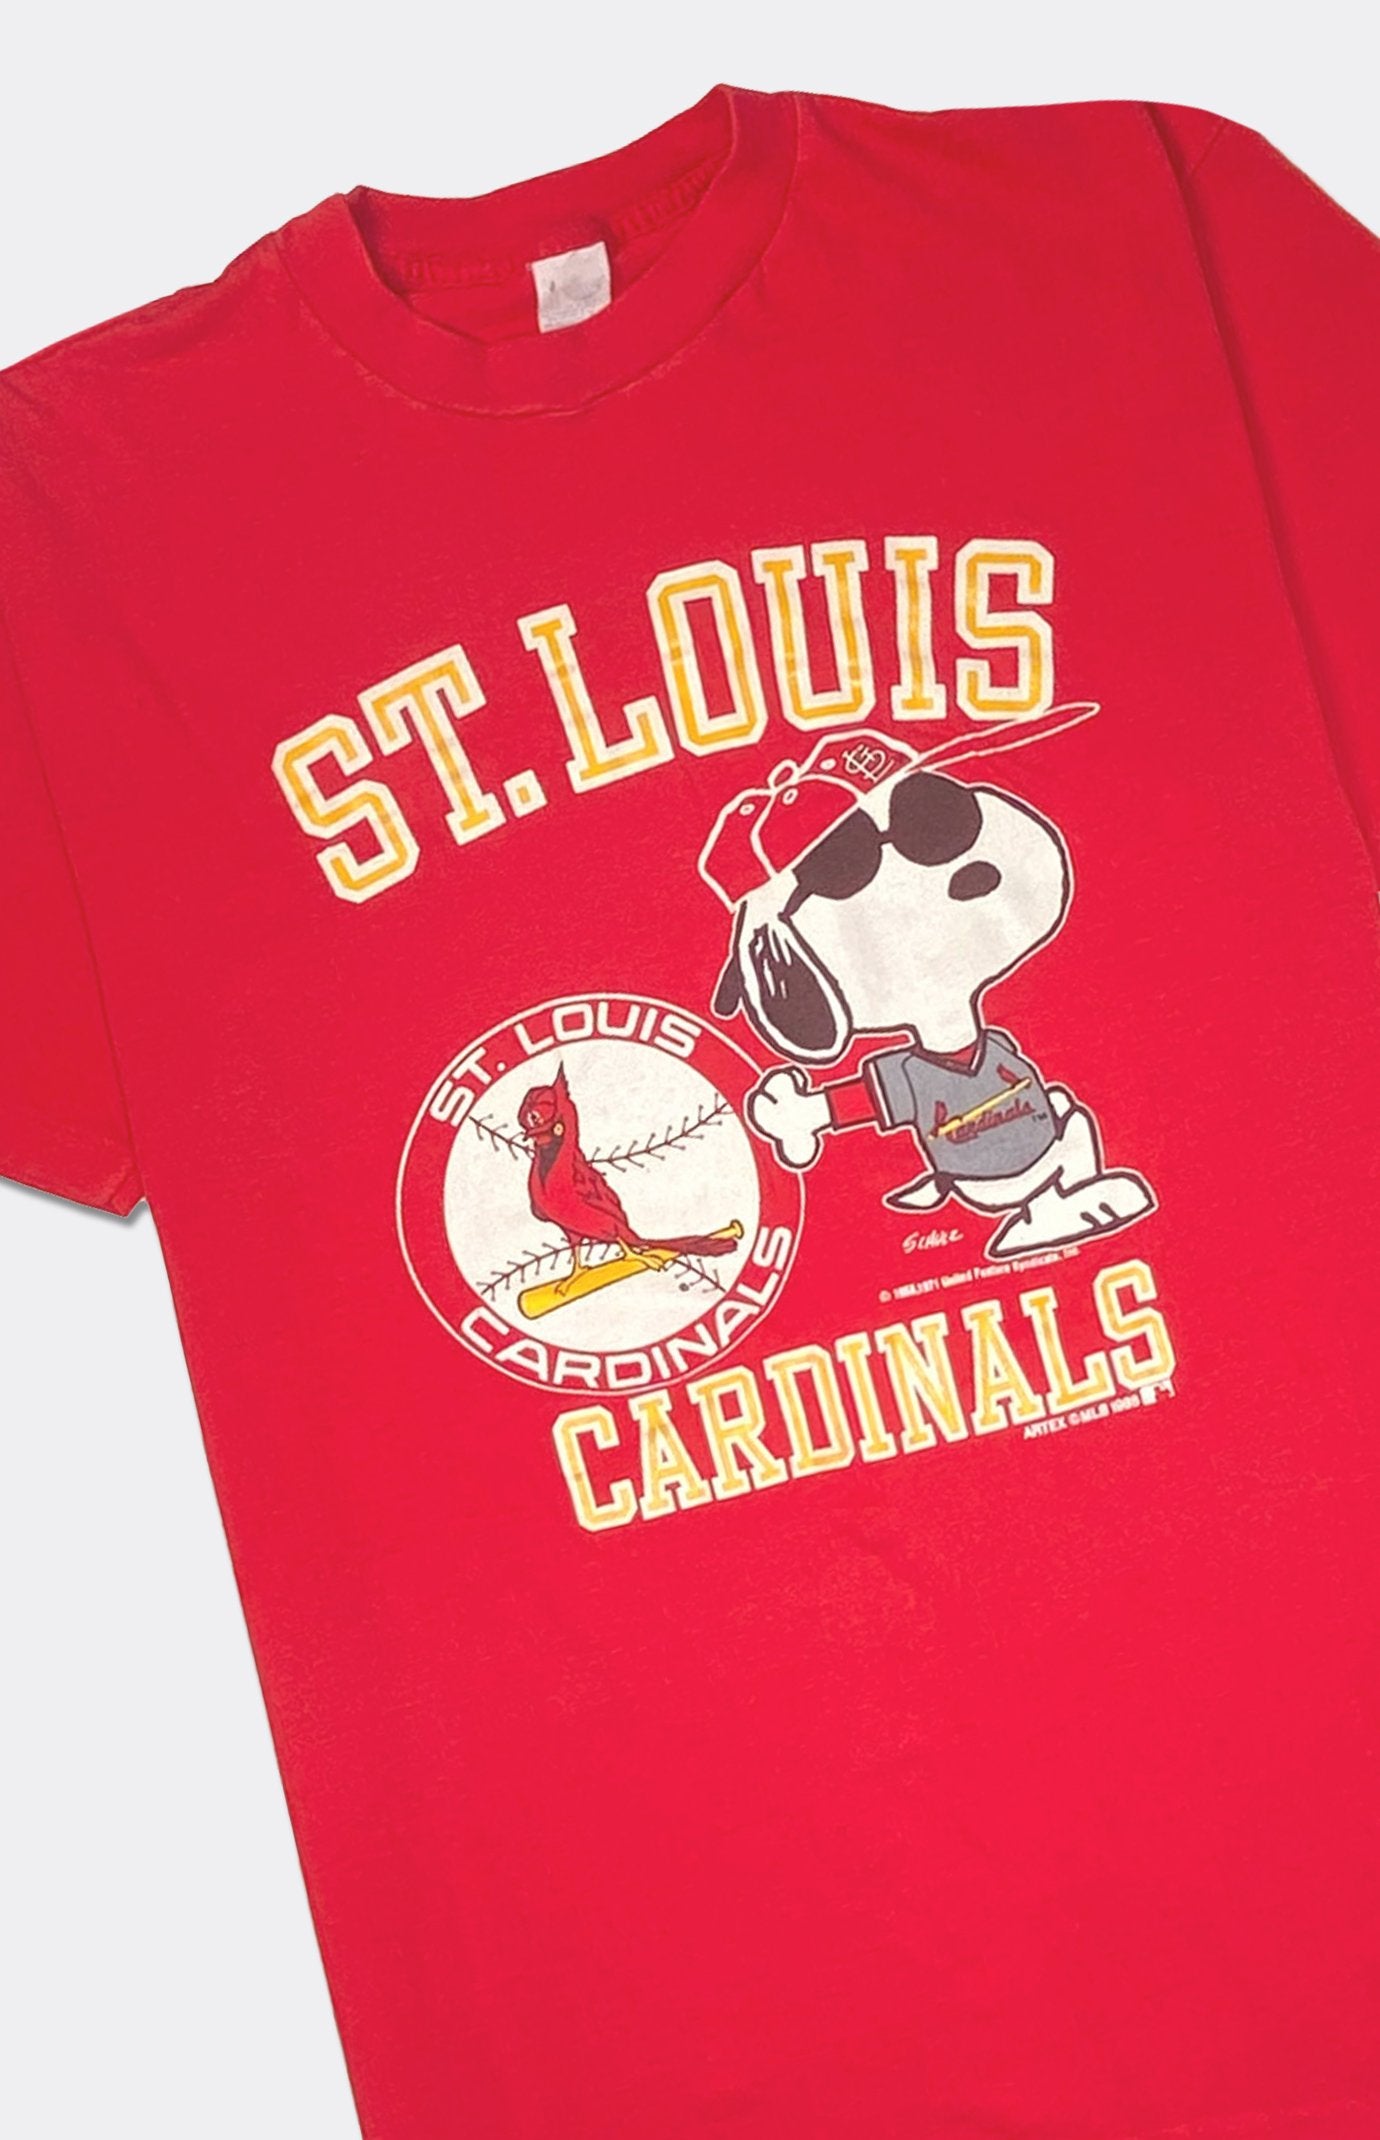 St. Louis Cardinals Vintage Apparel & Jerseys